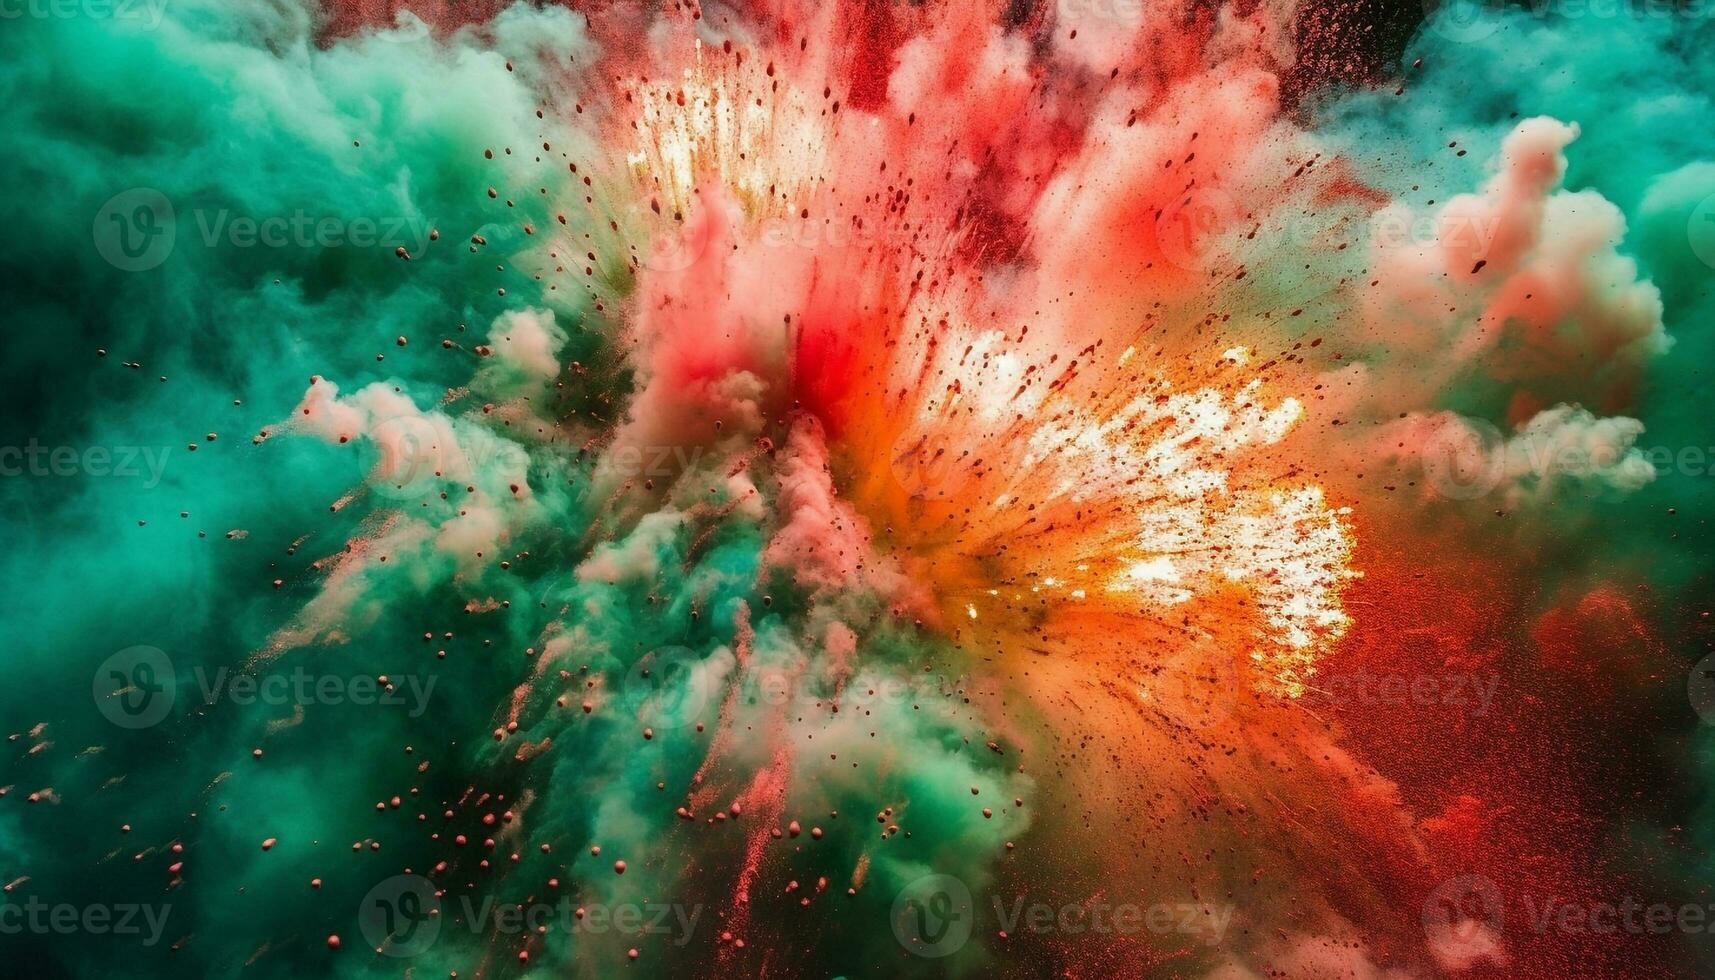 Exploding galaxy creates multi colored underwater nebula in futuristic space generated by AI photo